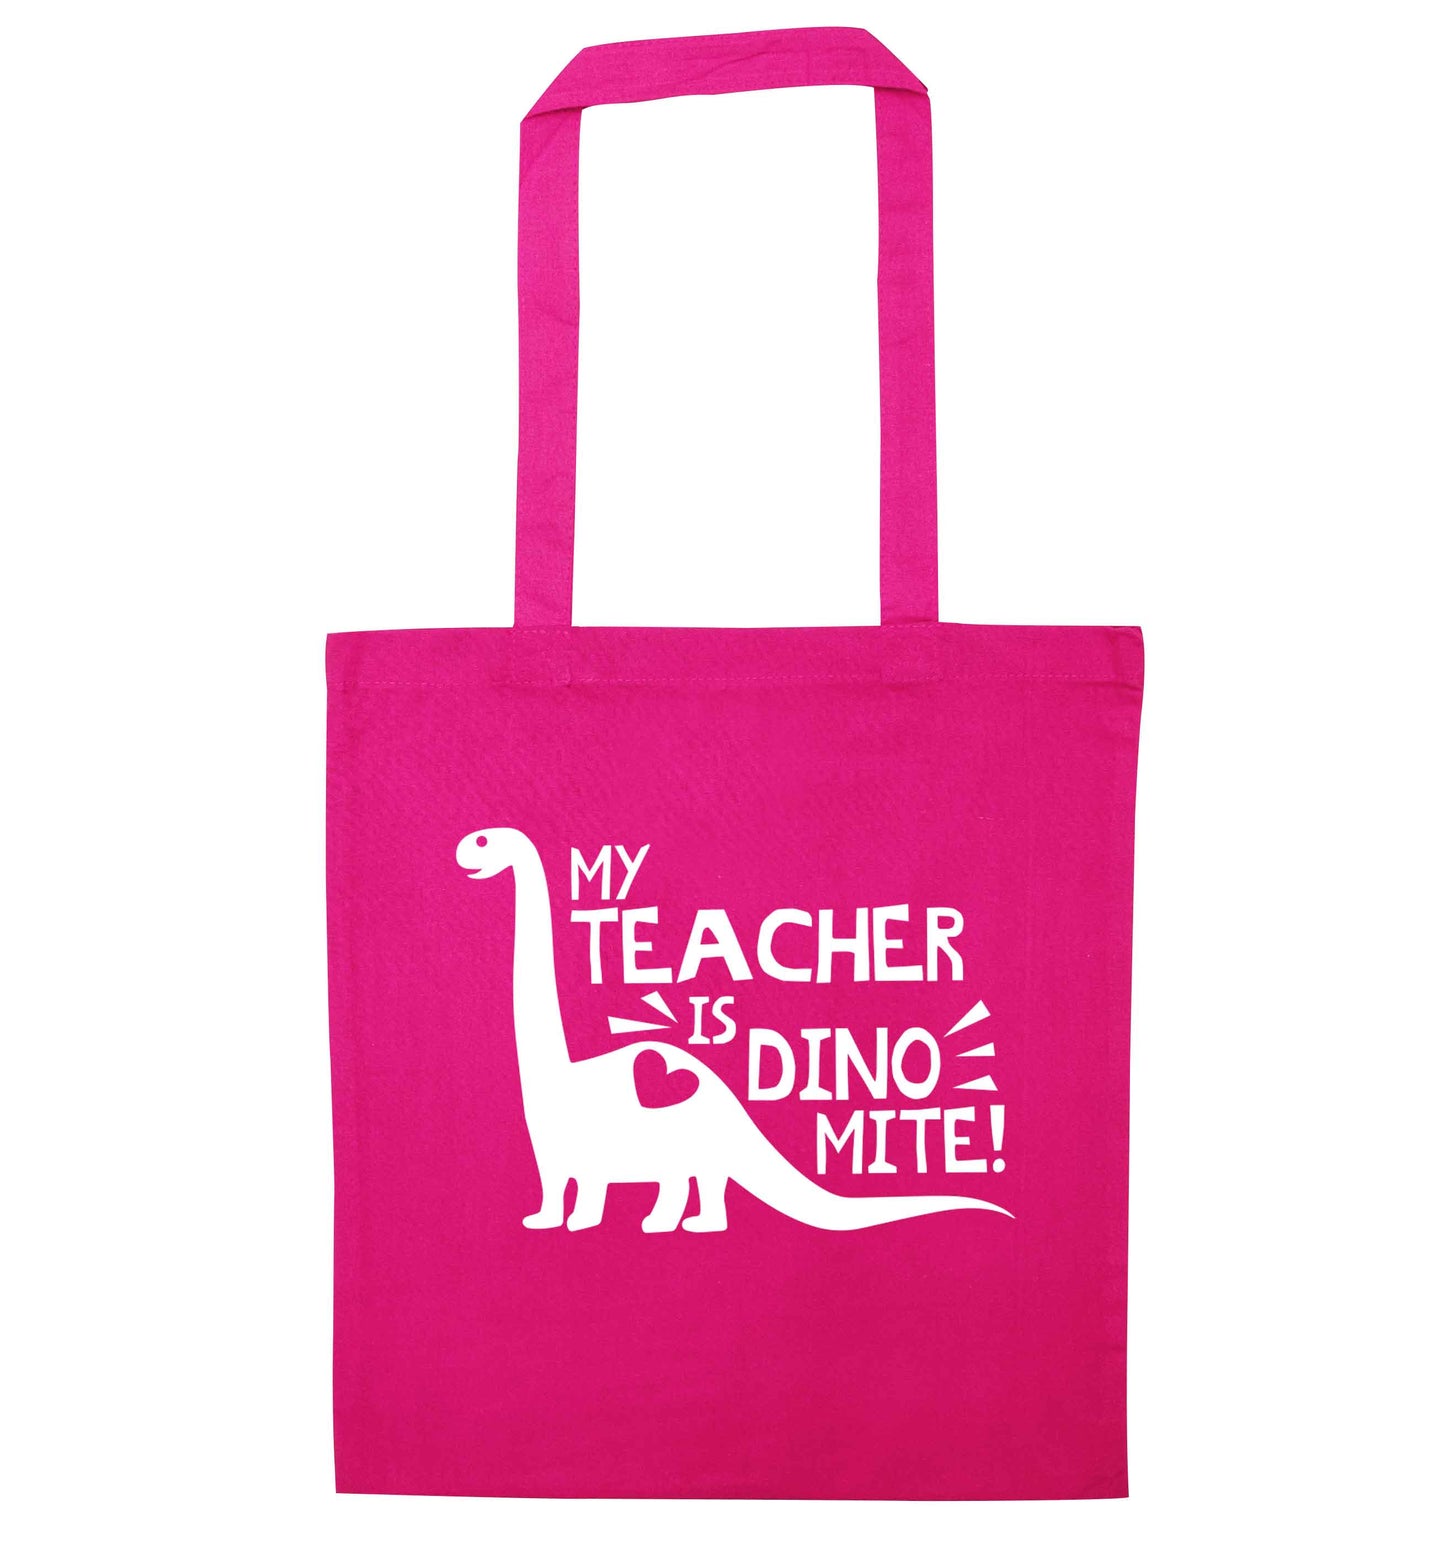 My teacher is dinomite! pink tote bag